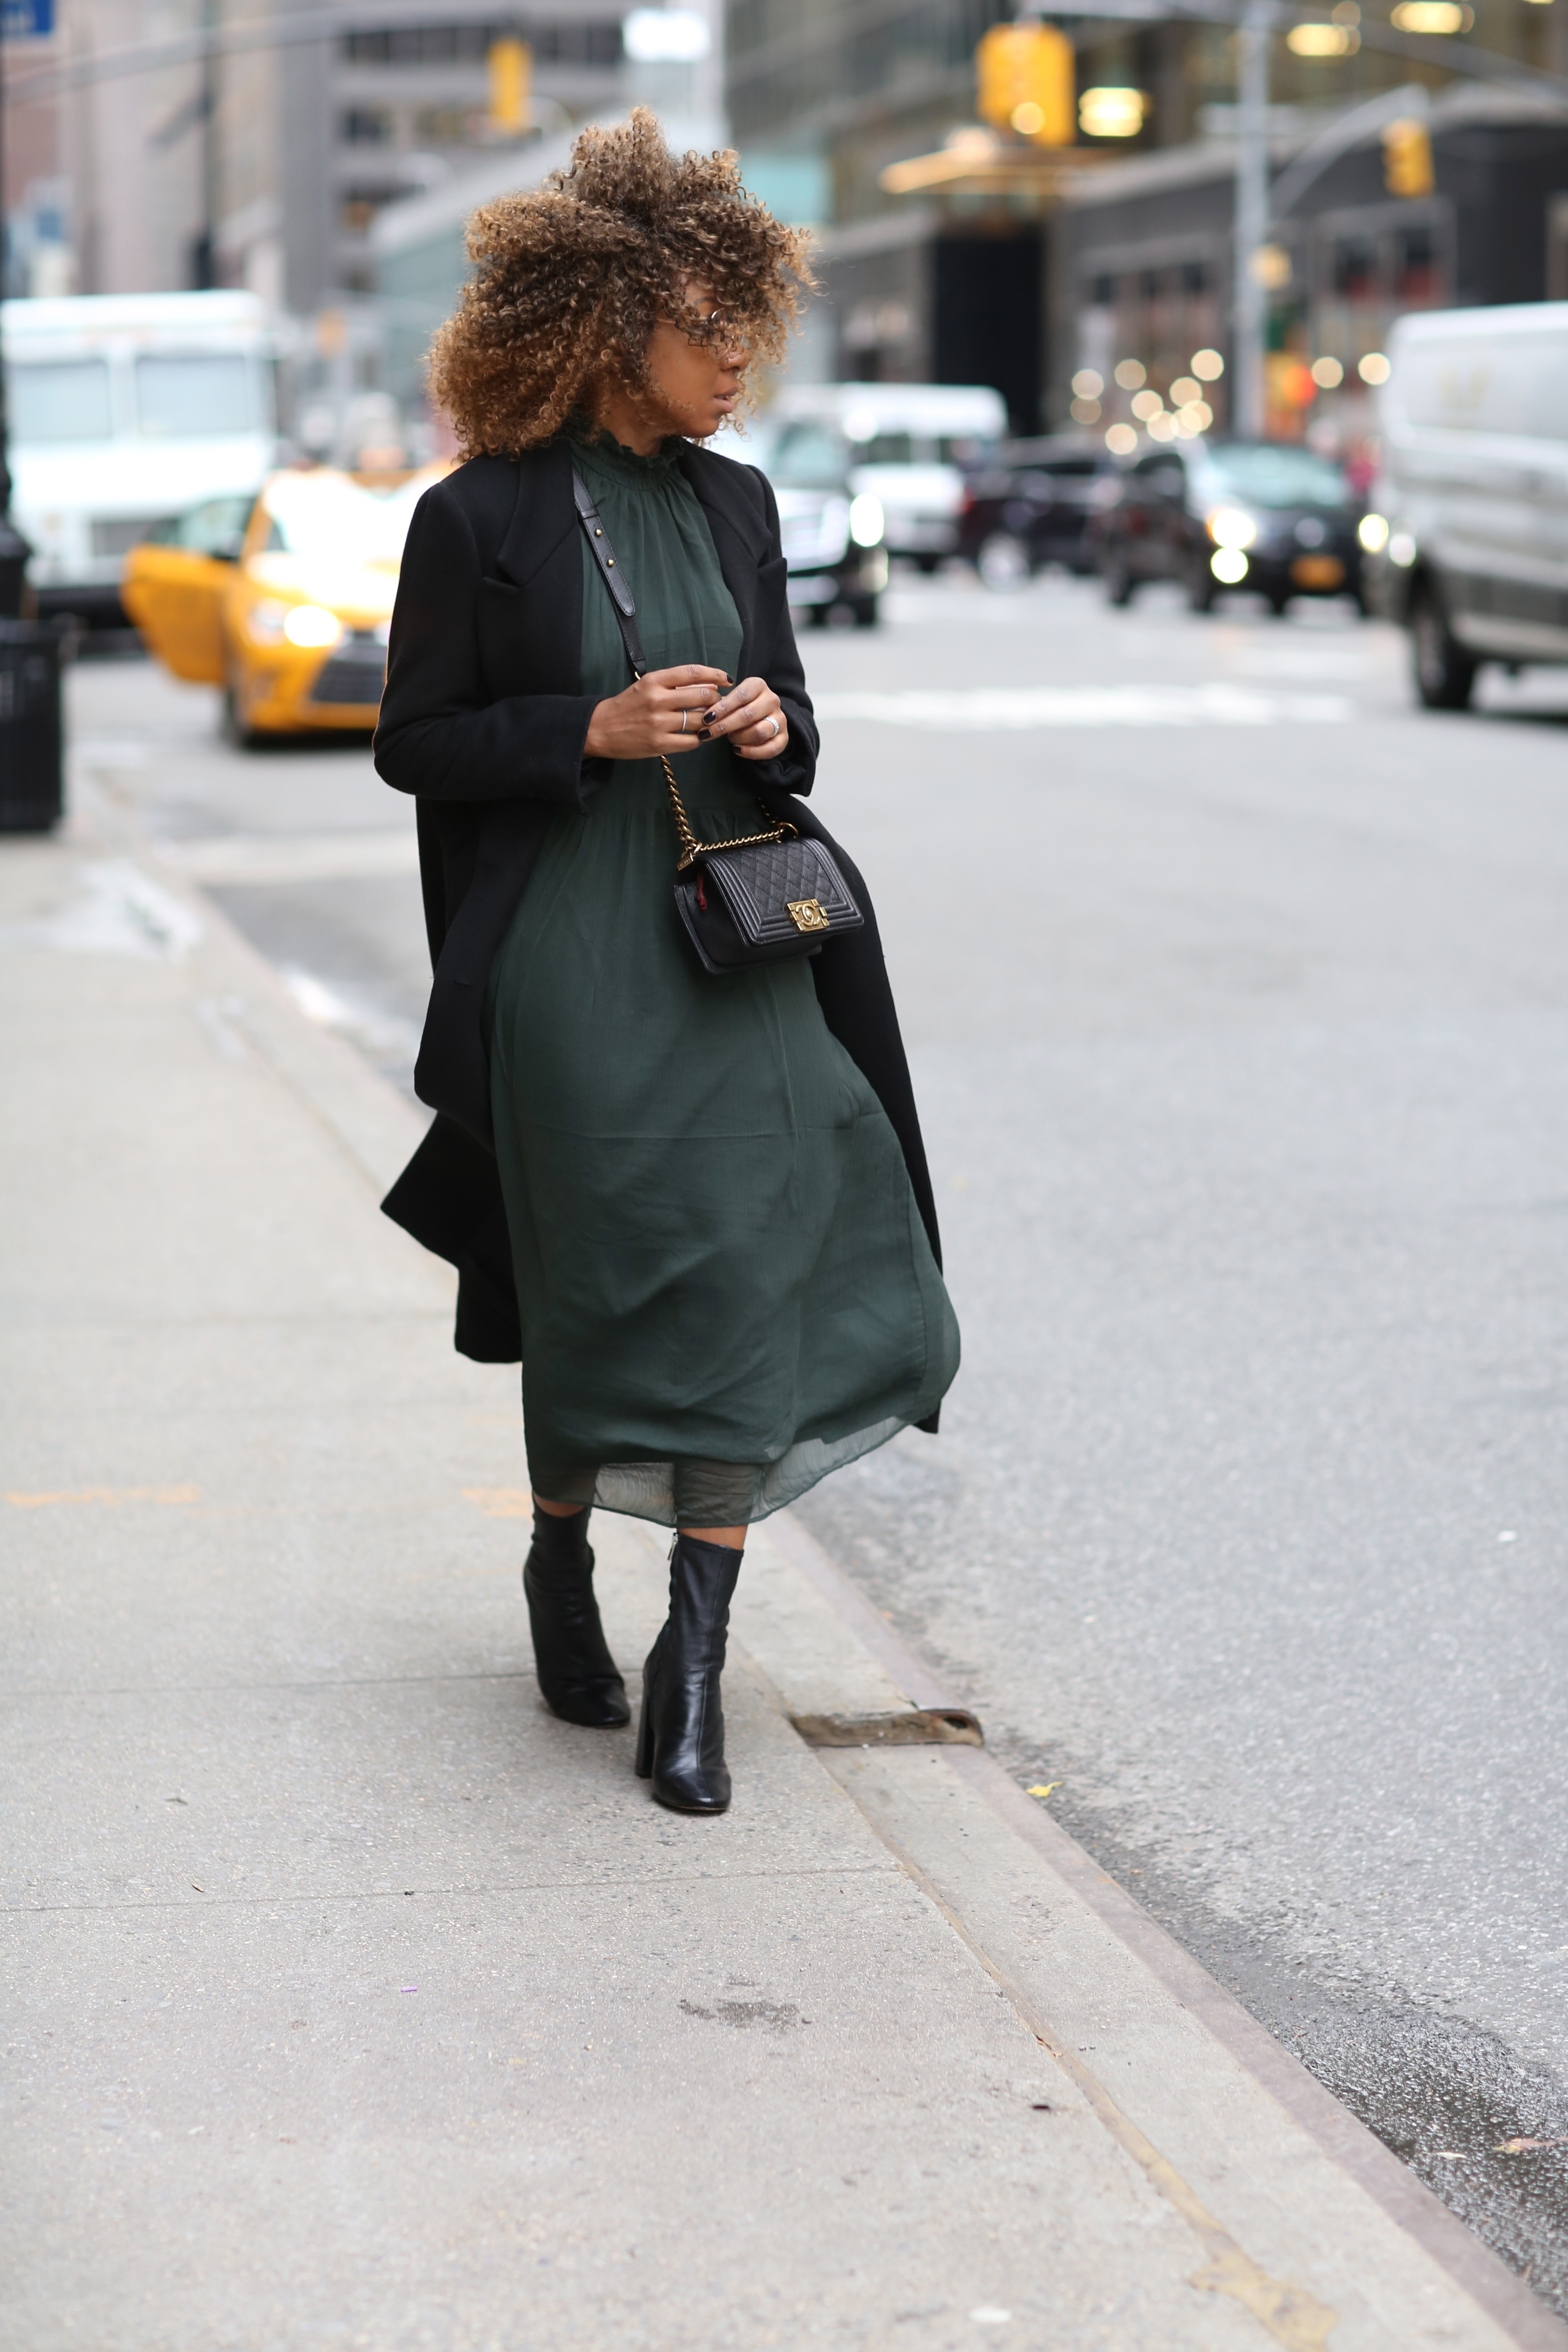 karen blanchard the new york fashion blogger wearing a Chanel small black caviar bag